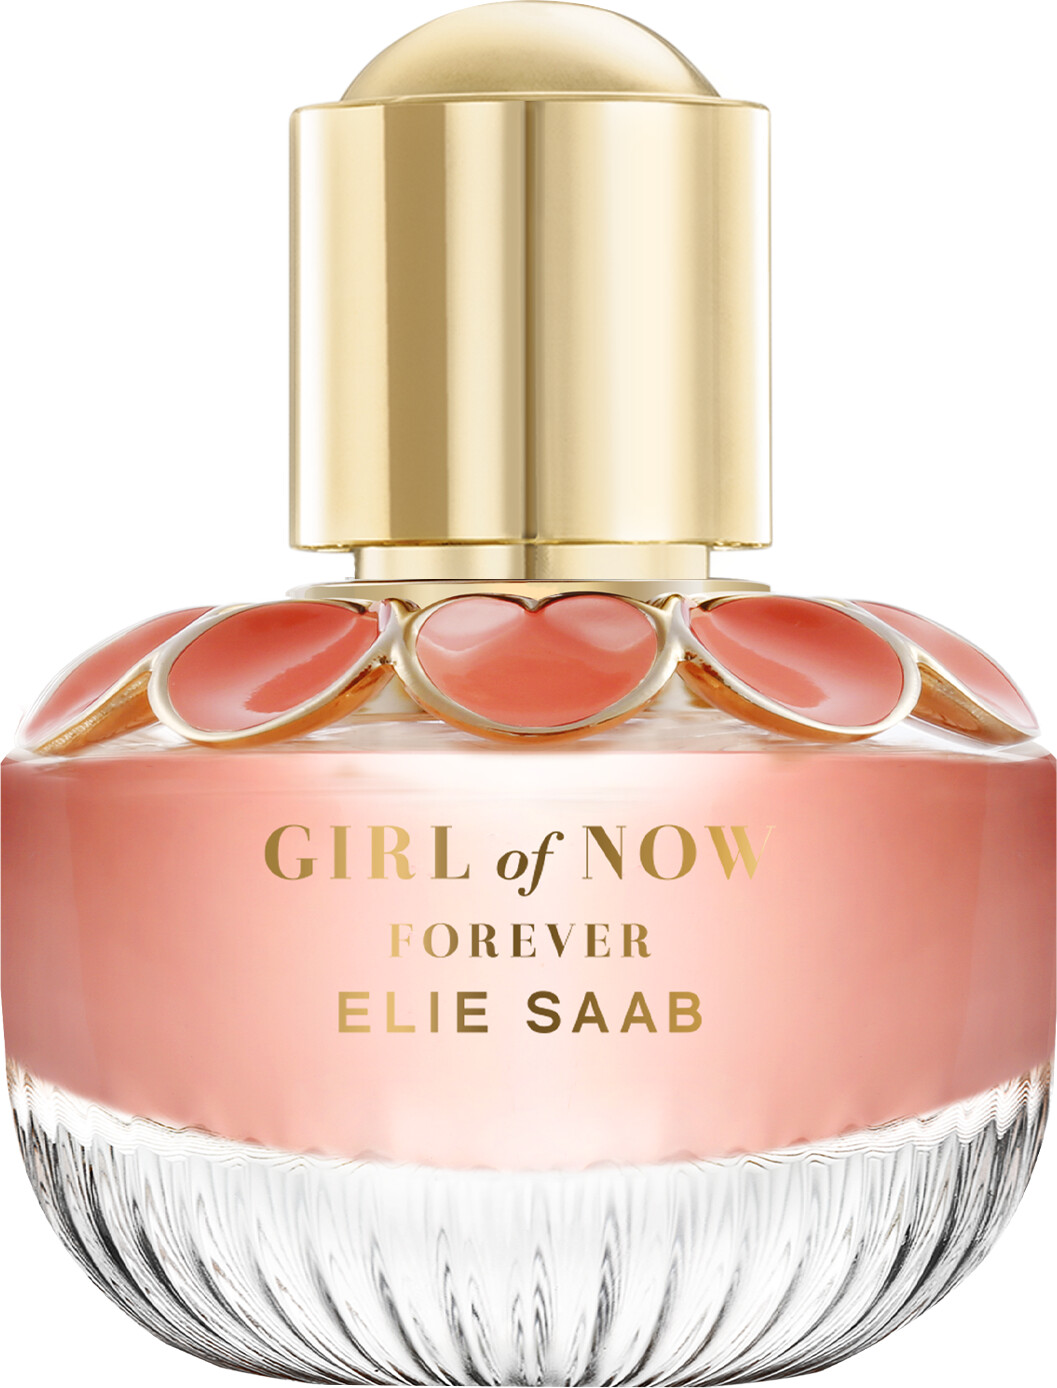 Elie Saab Girl of Now Forever Eau de Parfum Spray 30ml